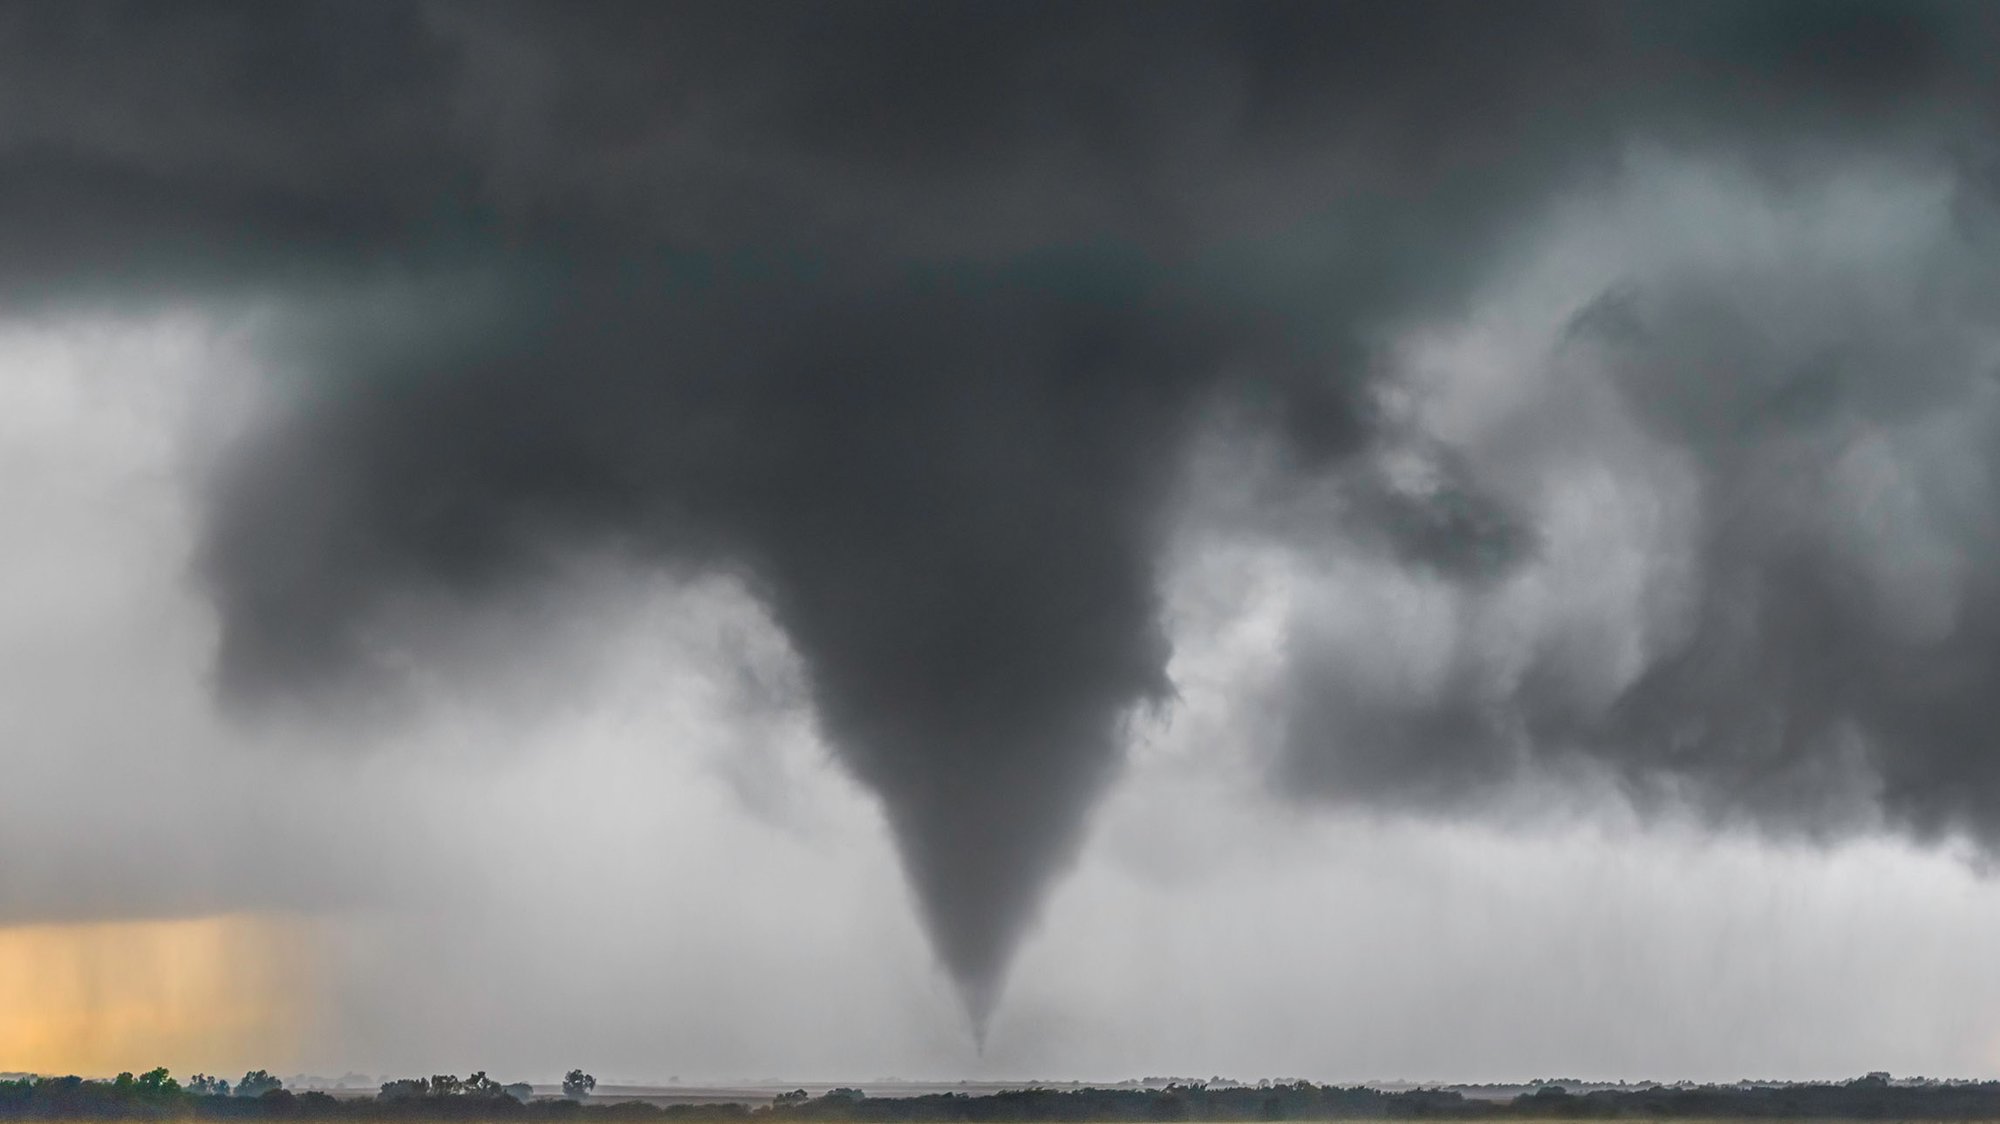 Stock photo of a tornado